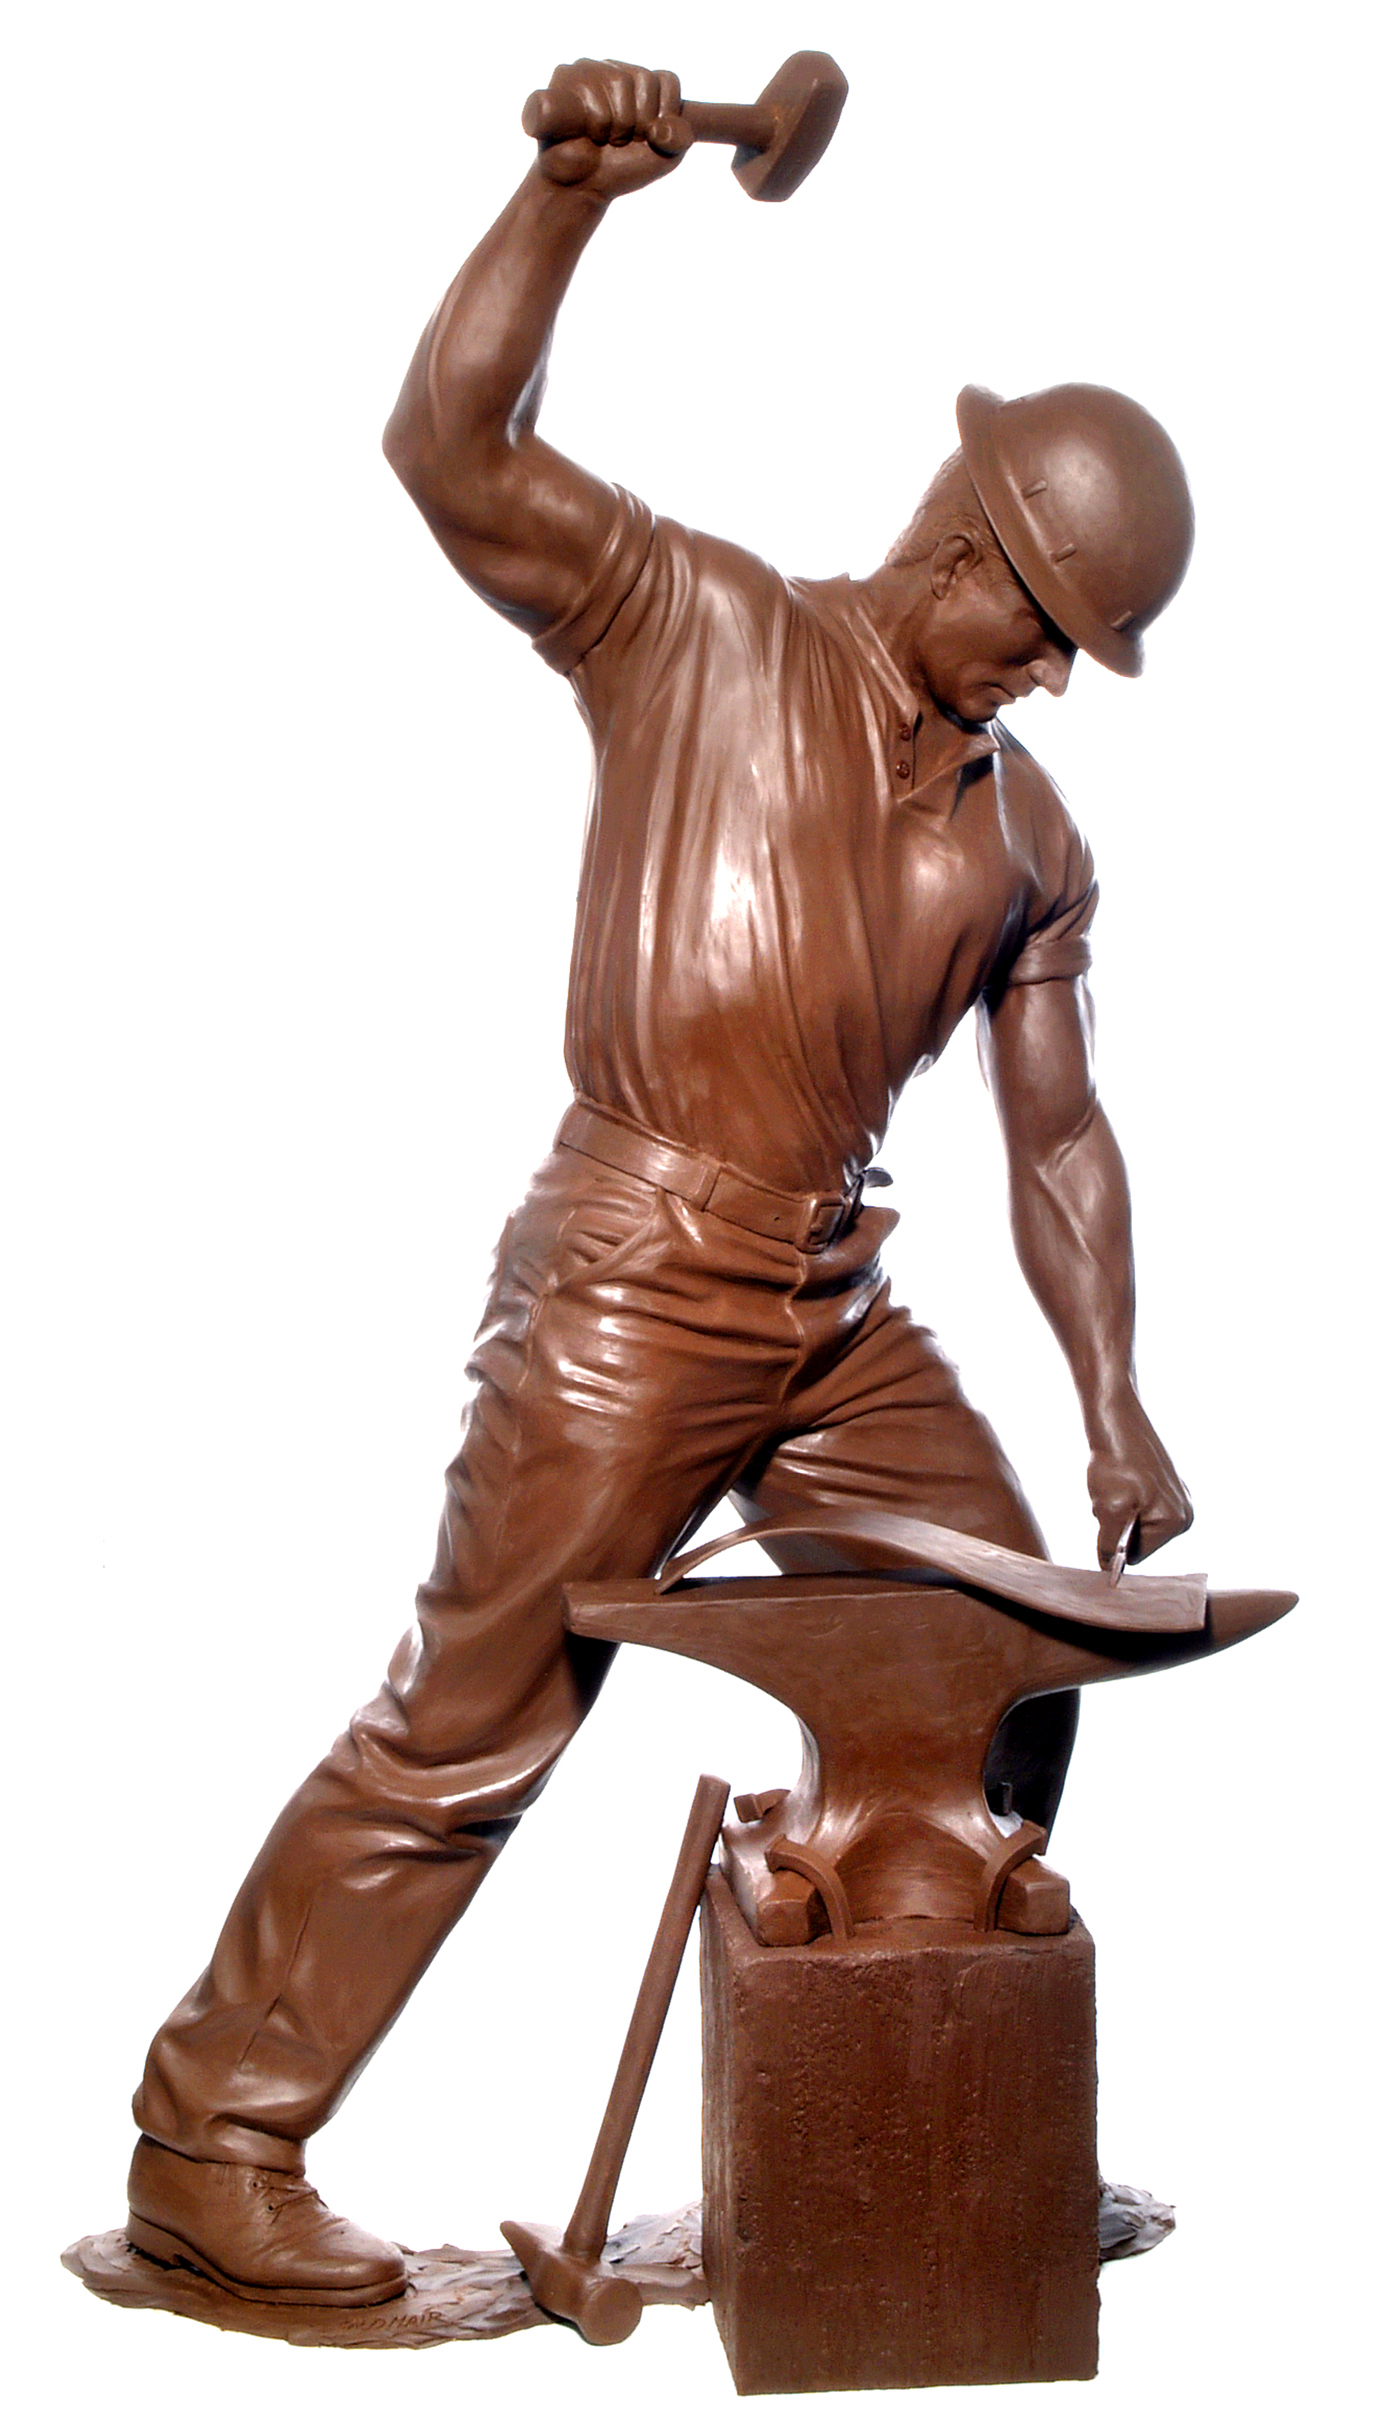 http://www.purdue.edu/uns/images/+2005/boilermaker-statue.jpg